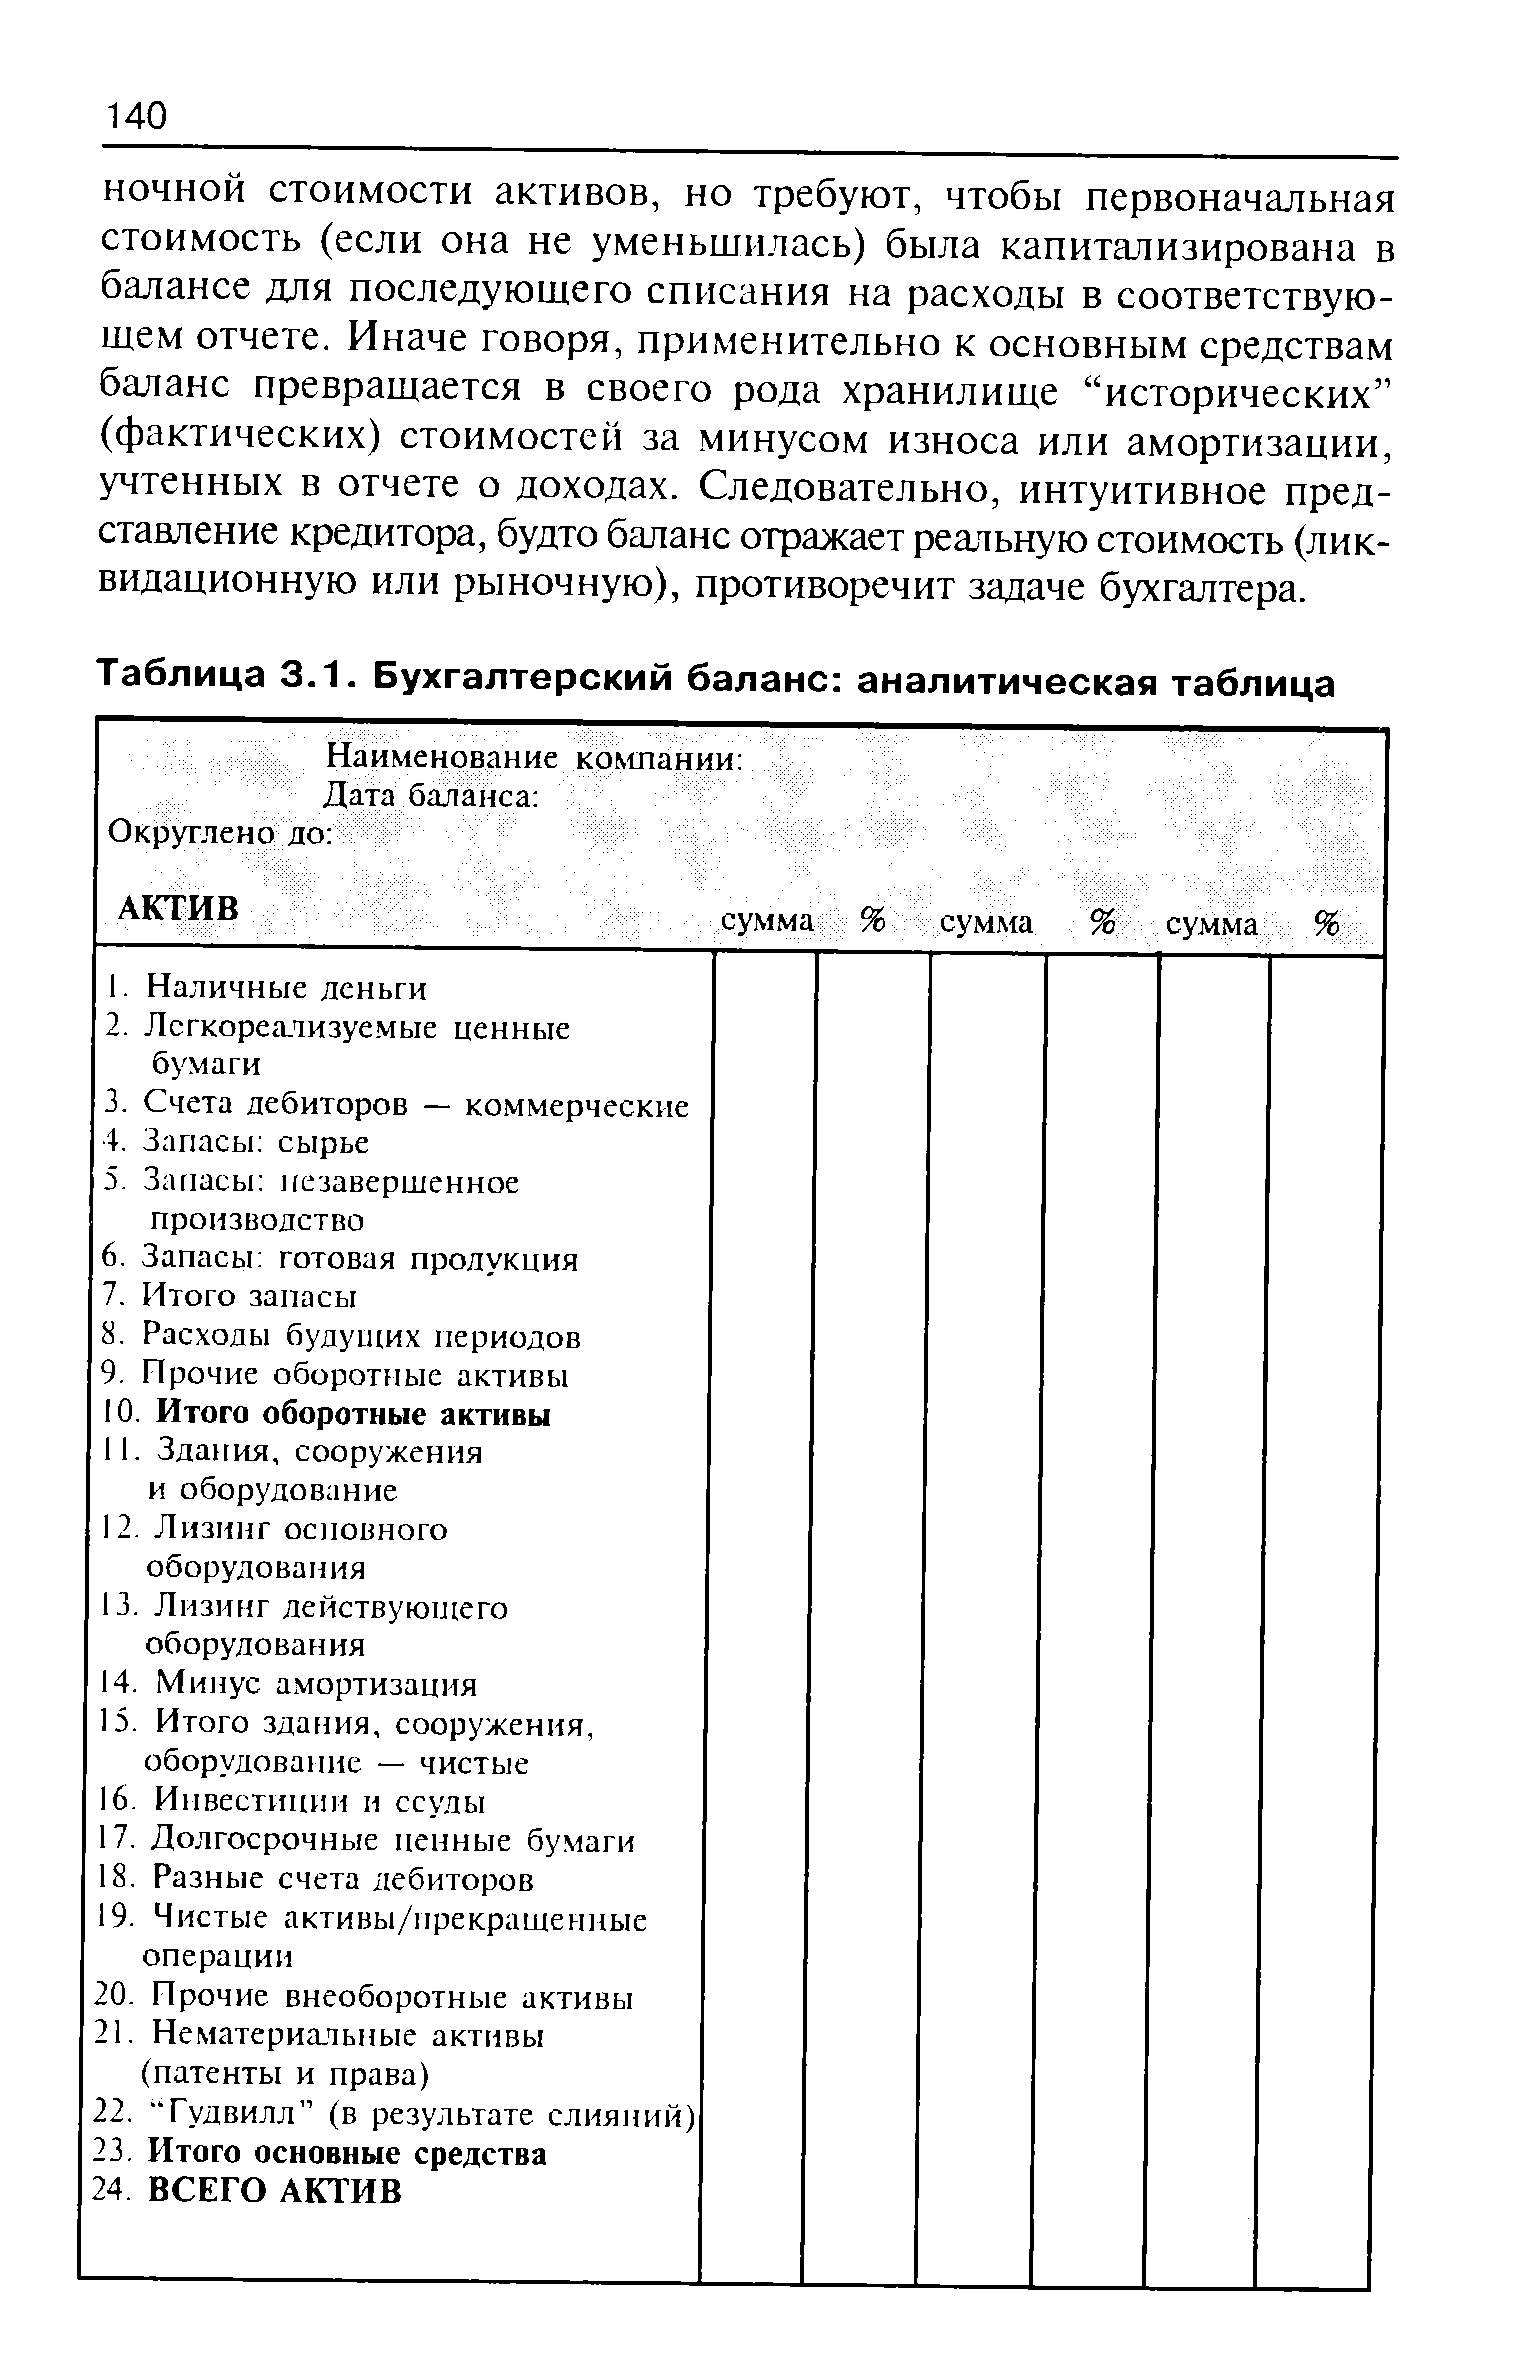 Таблица 3.1. Бухгалтерский баланс аналитическая таблица
